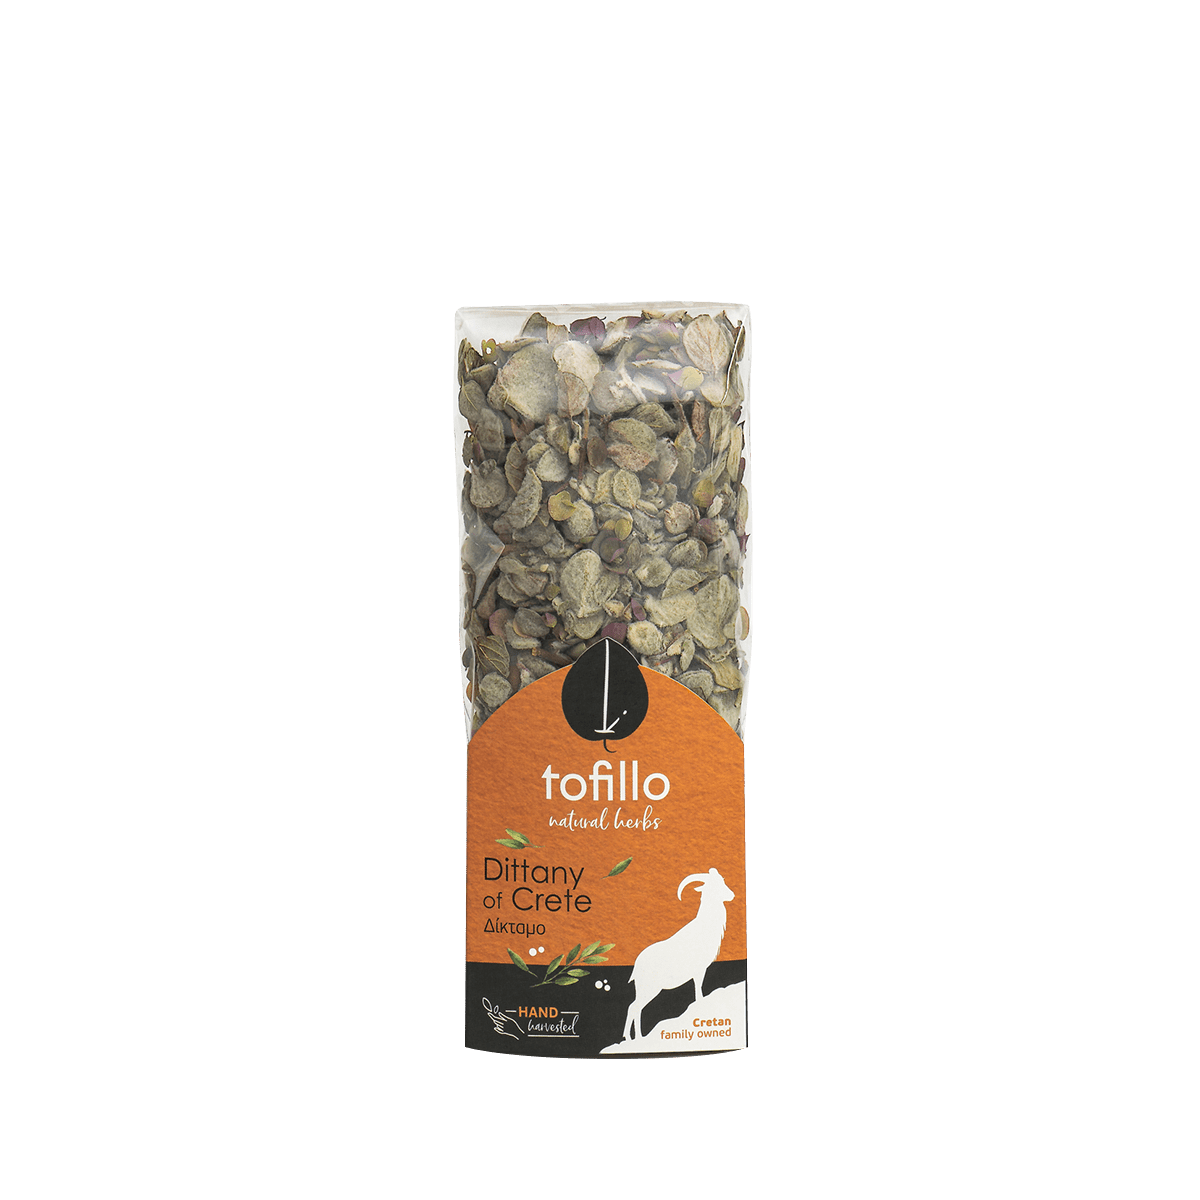 TOFILLO natural krétai dictamus tea, 22 gr